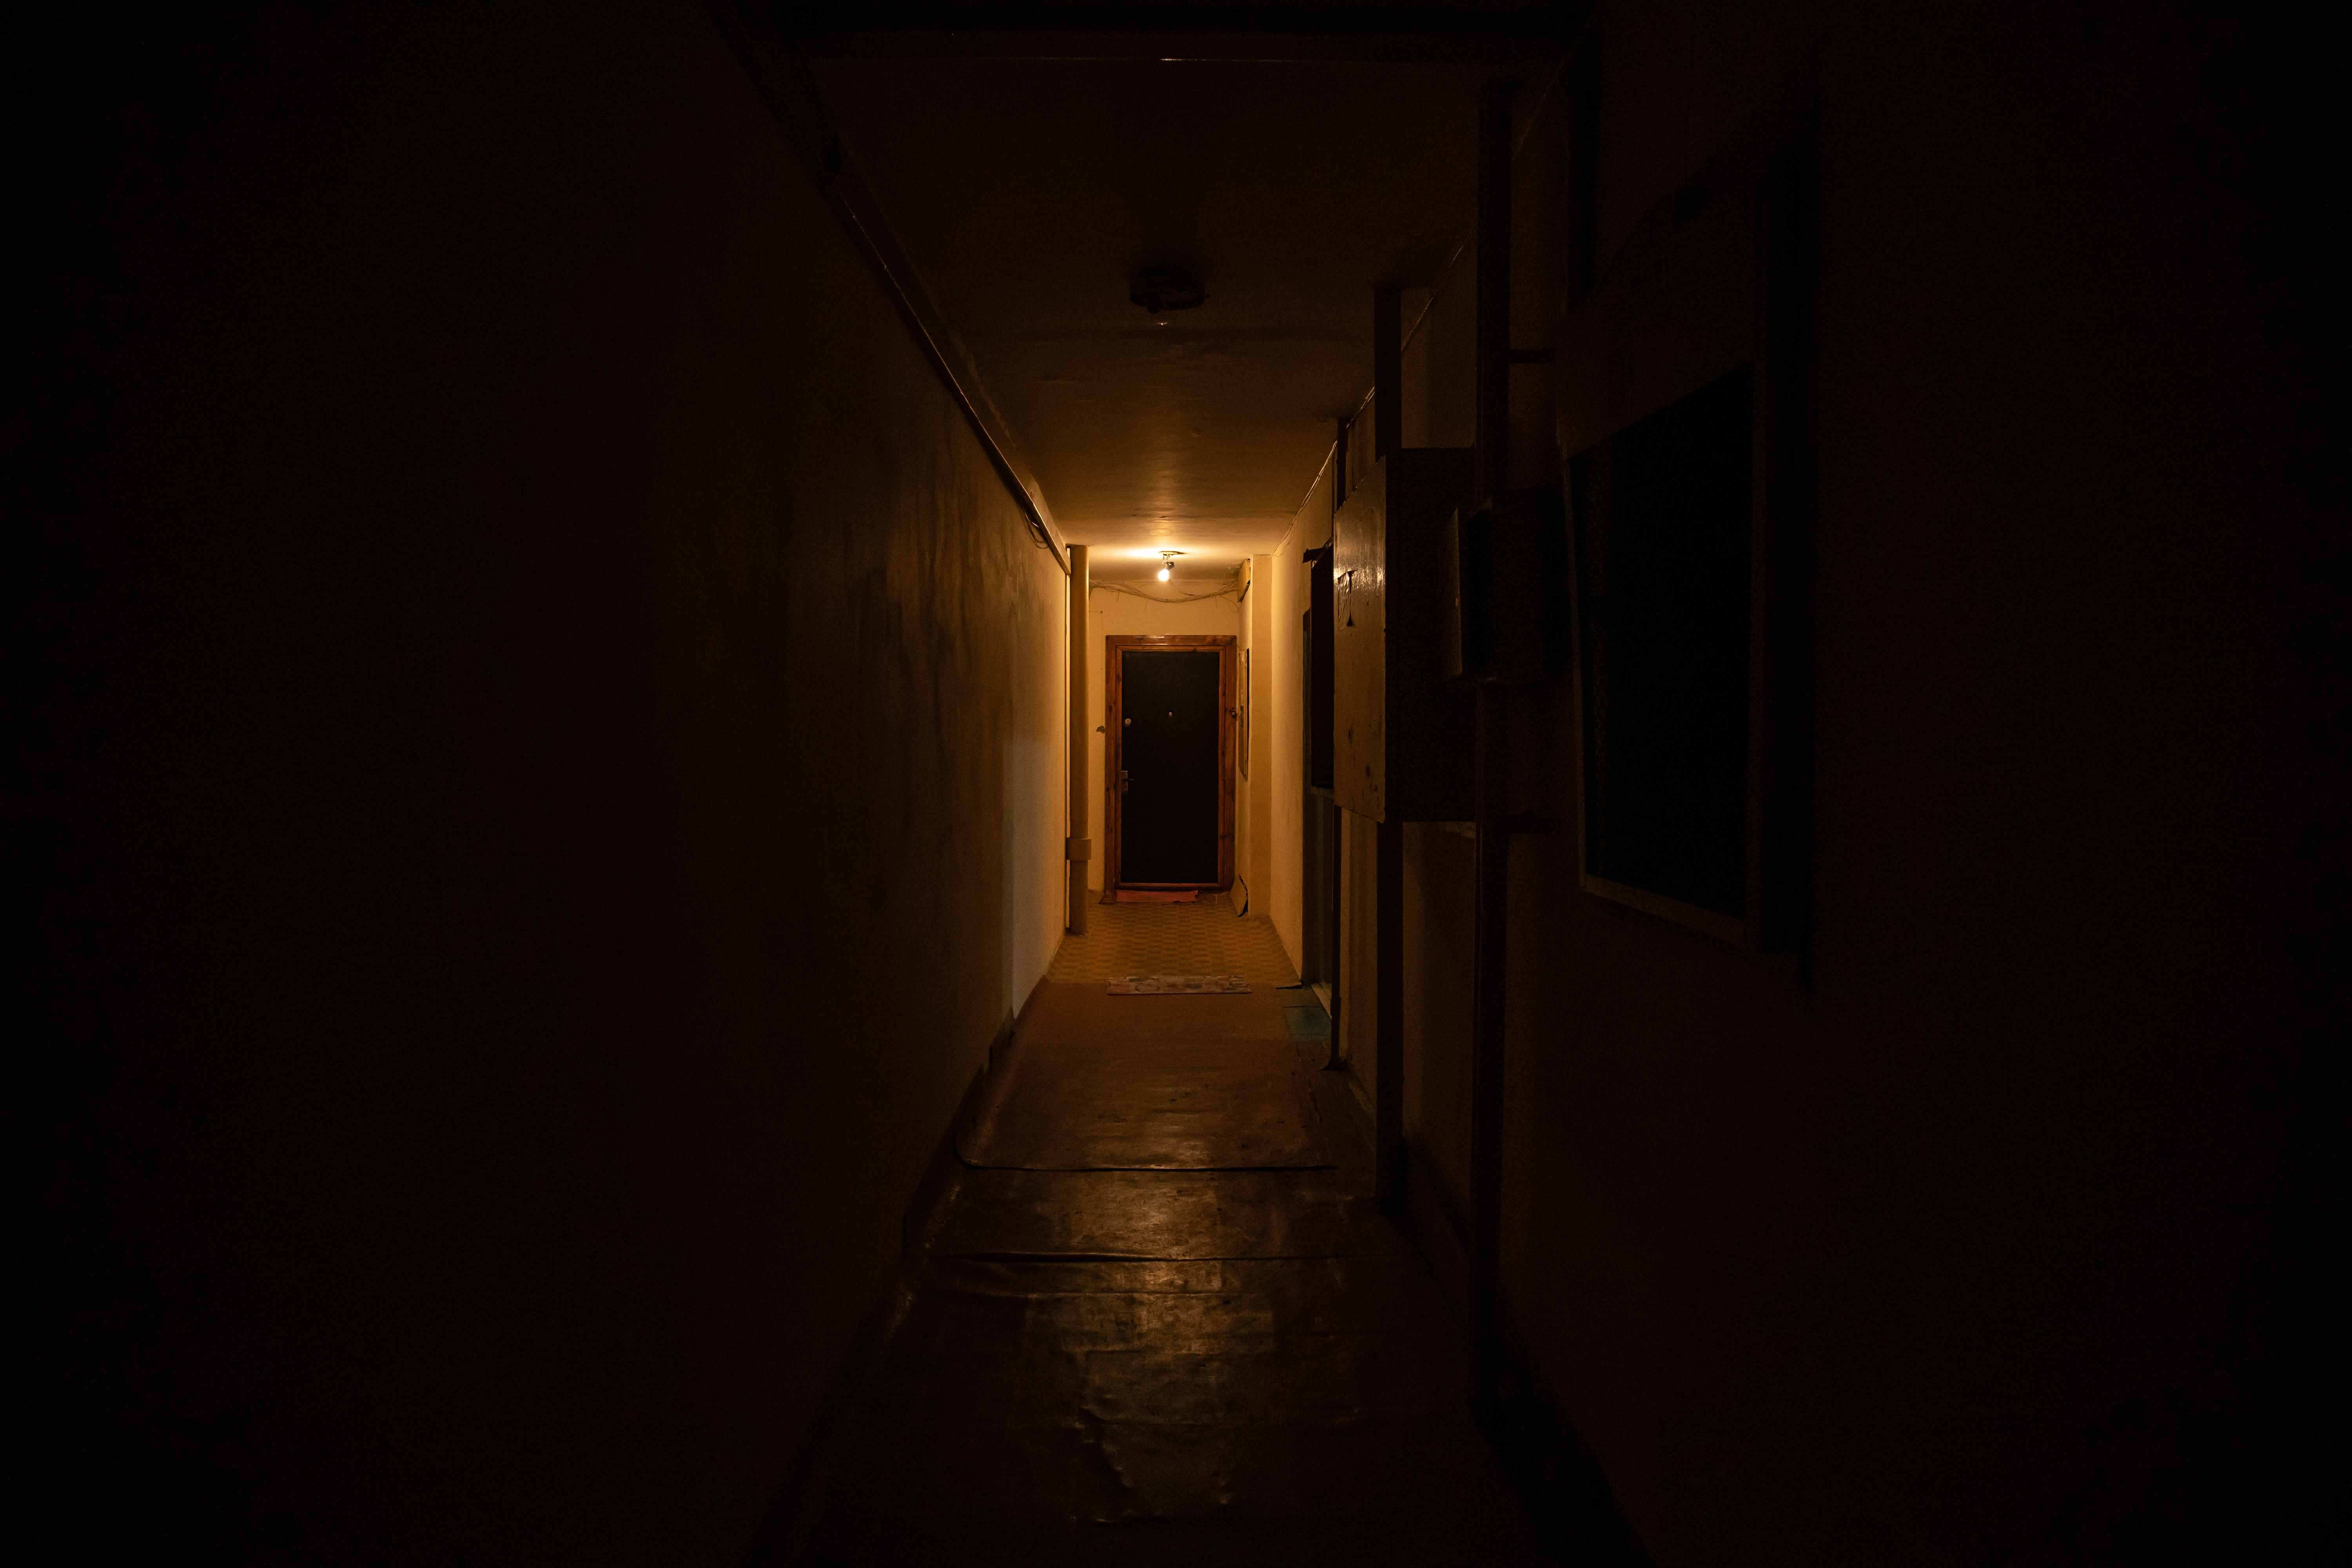 Pasillo oscuro vacío con luz al final | Fuente: Shutterstock.com